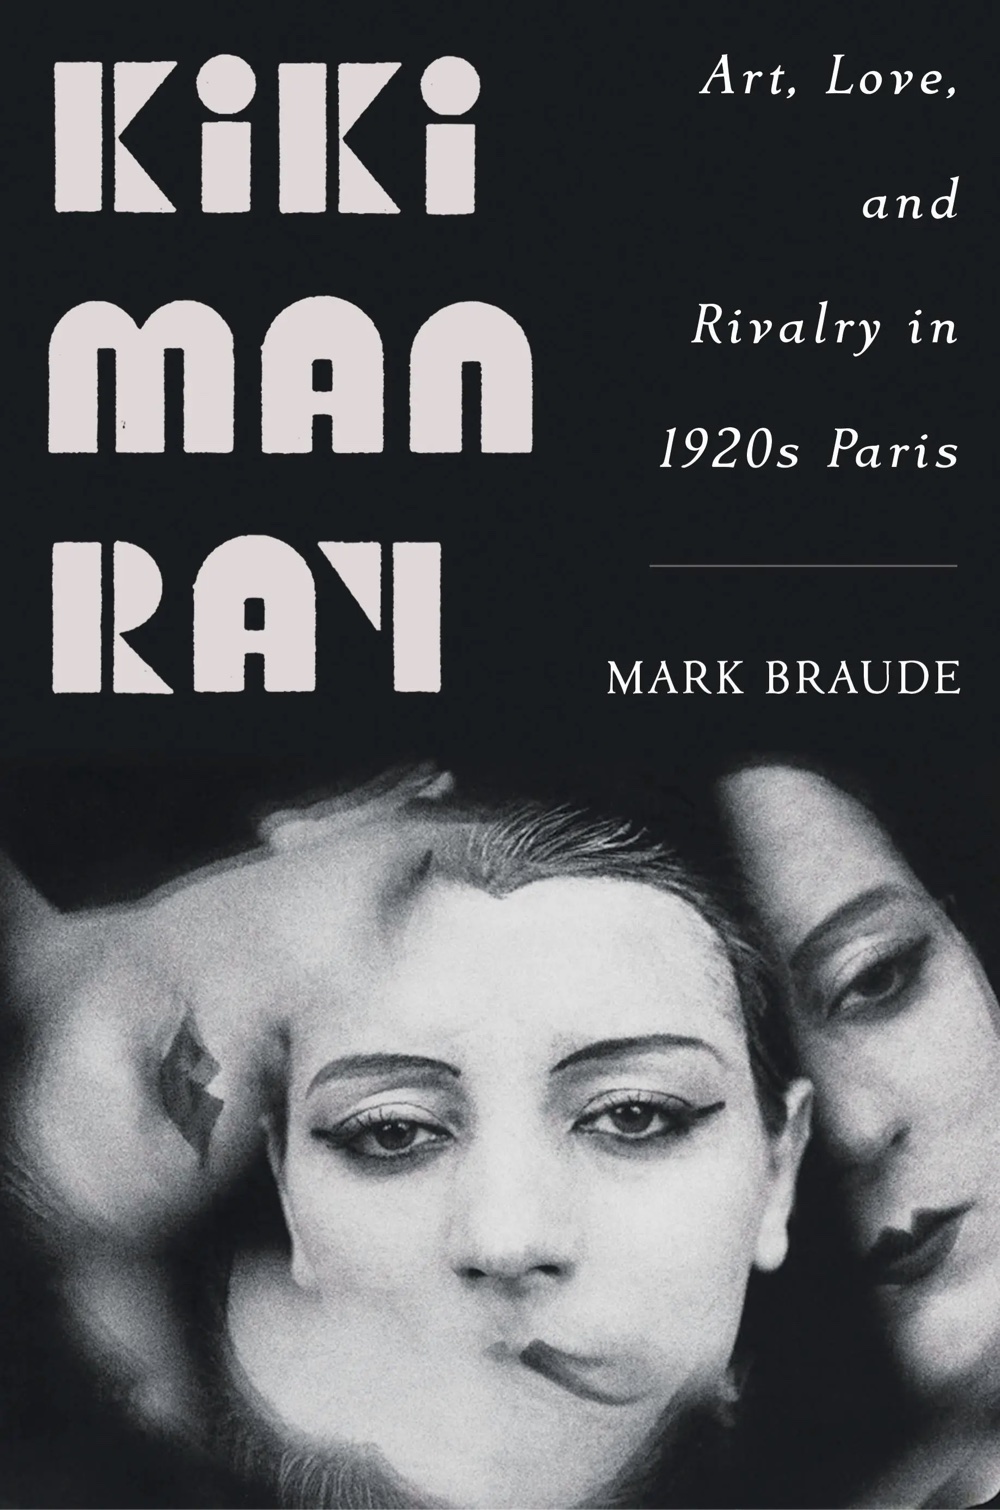 cover for Kiki Man Ray